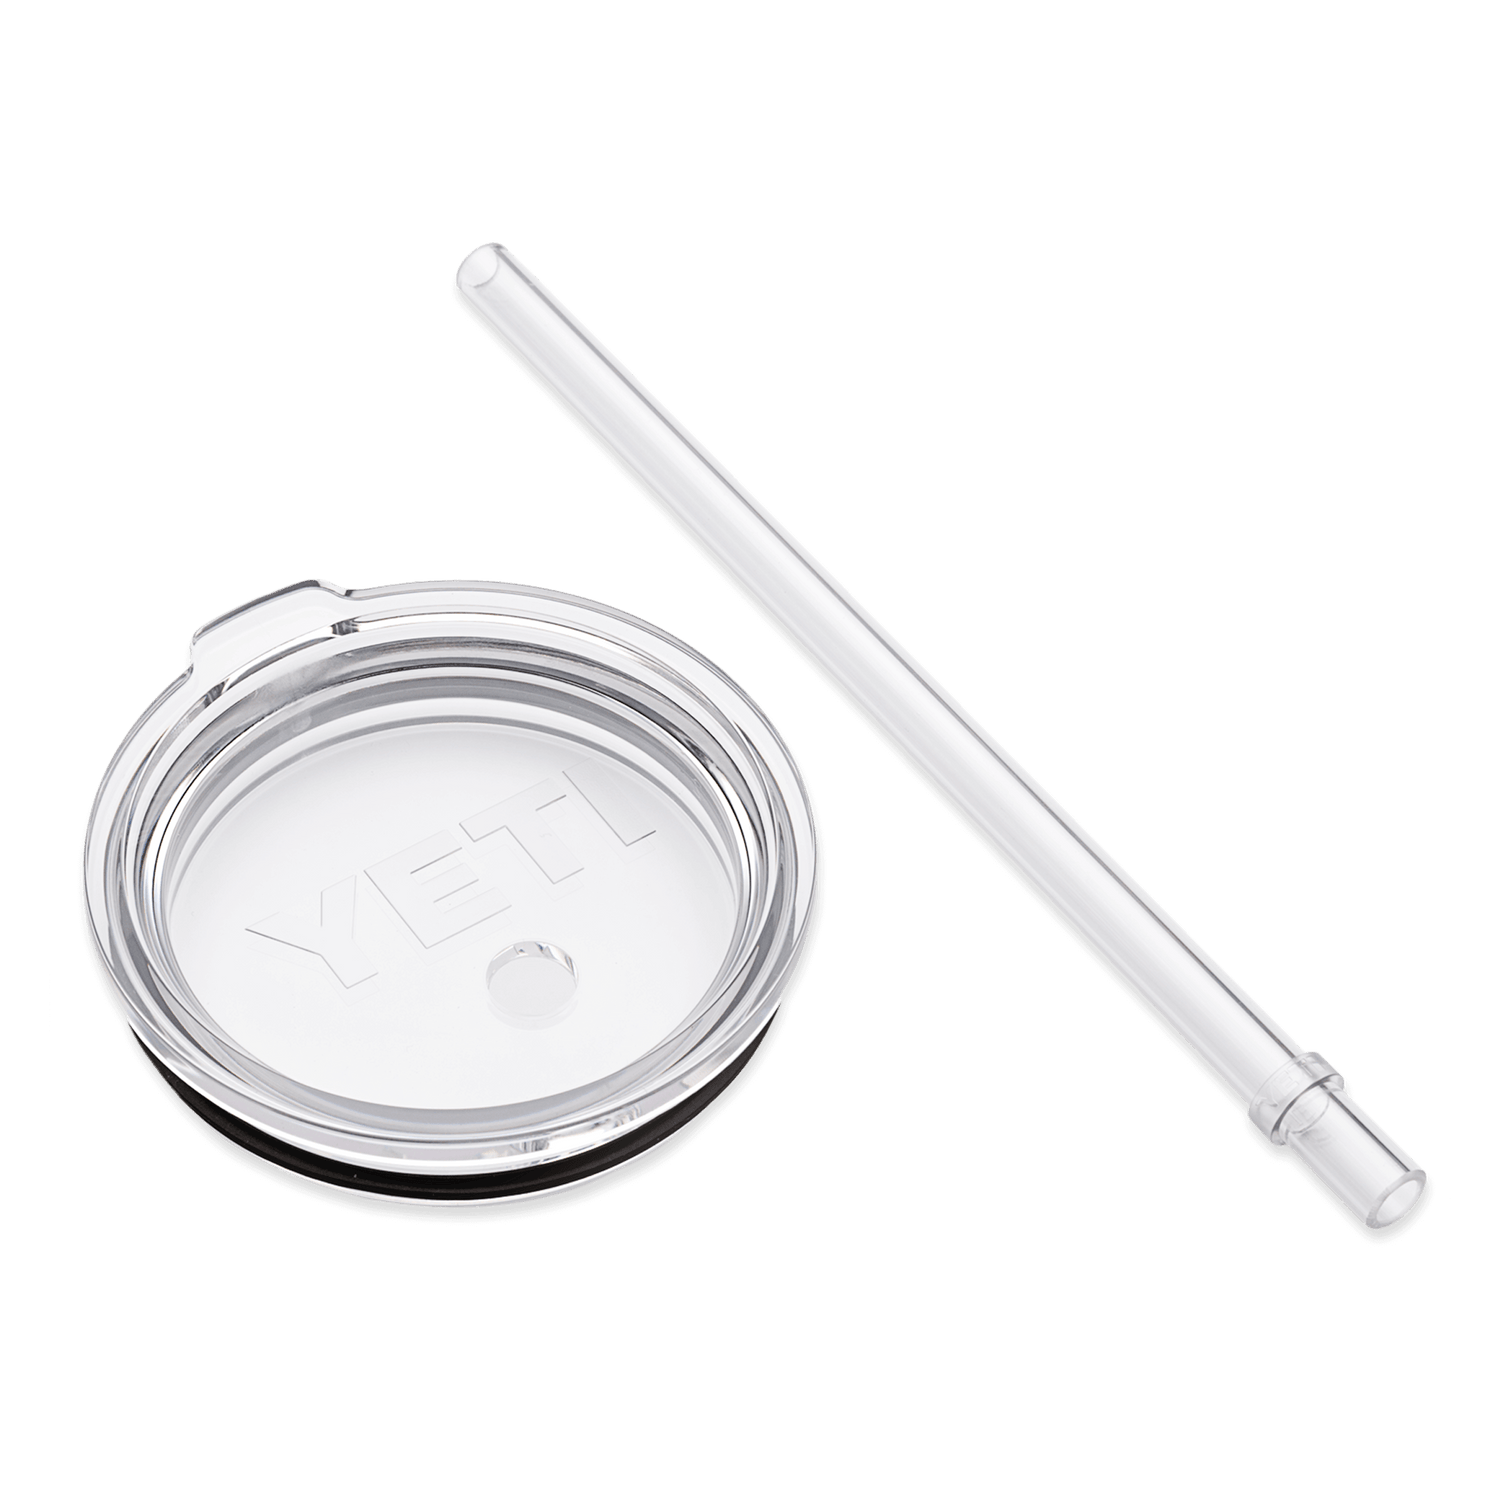 YETI Rambler 30oz Clear BPA Free Tumbler Lid and Straw